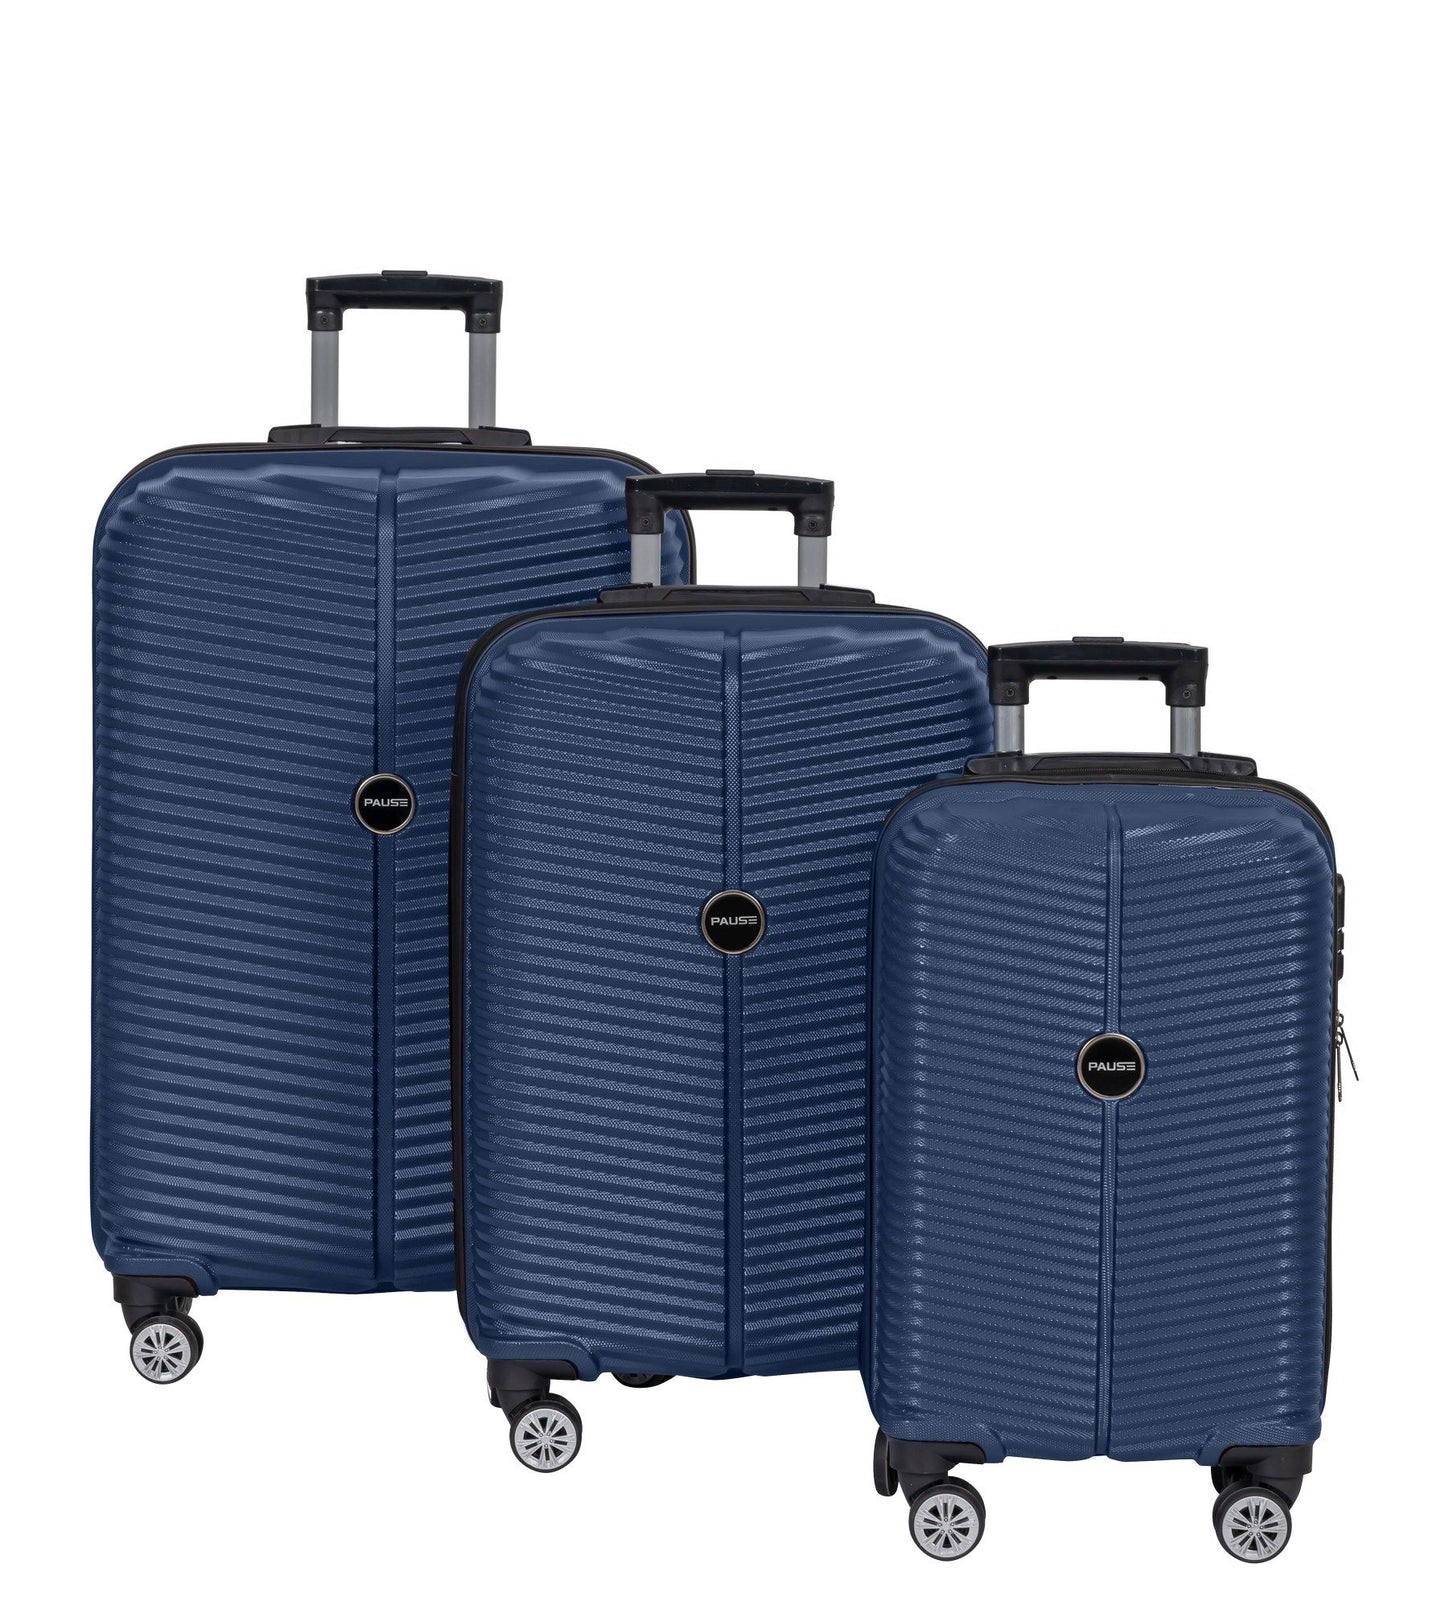 Pisa kuffertsæt - 3stk. - Mørkeblå